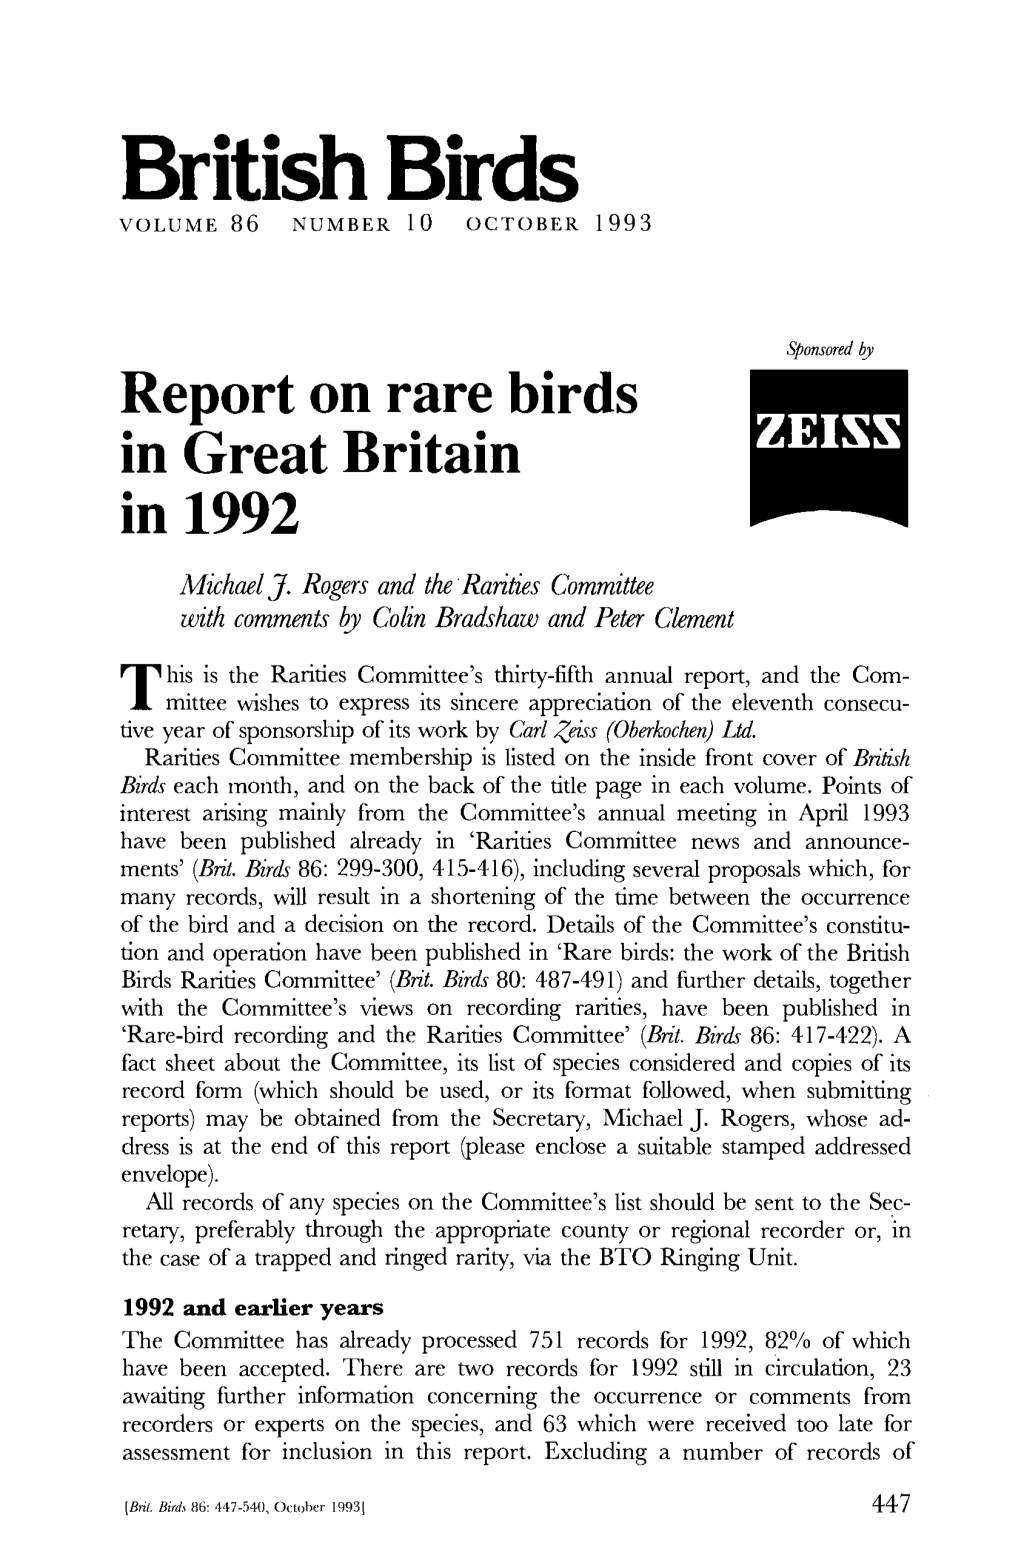 Report on Rare Birds in Great Britain in 1992